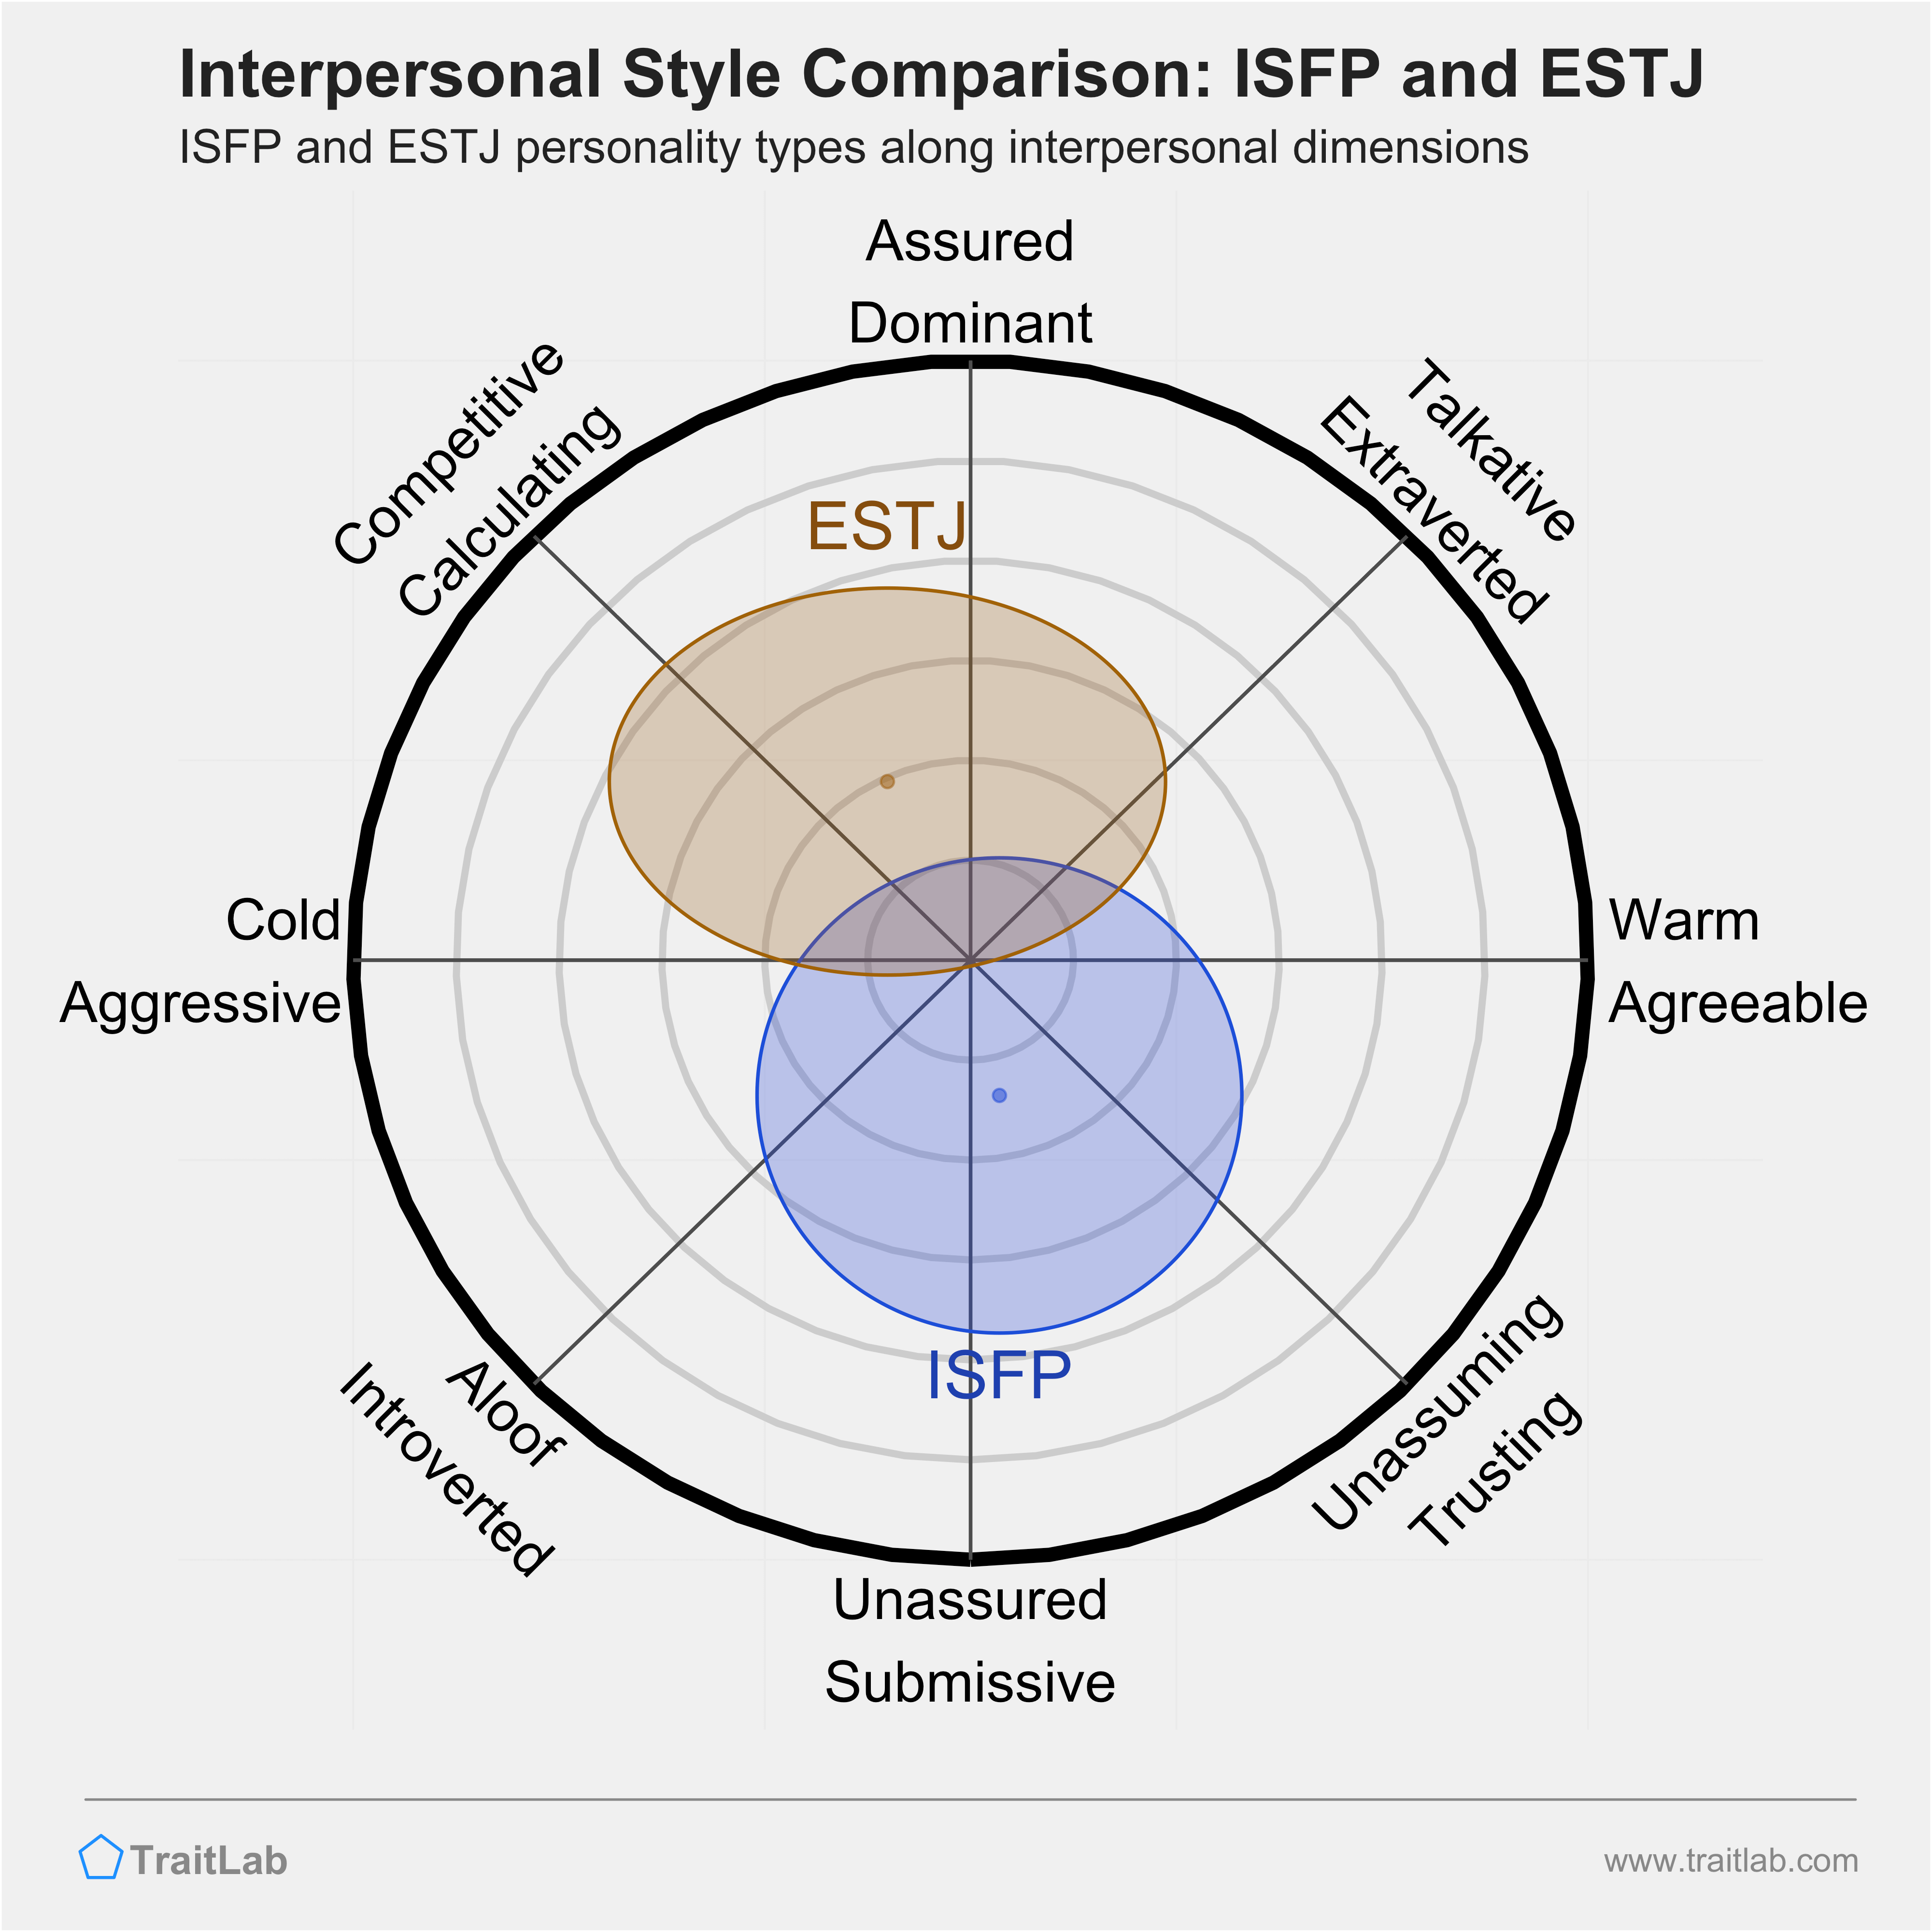 ISFP and ESTJ comparison across interpersonal dimensions